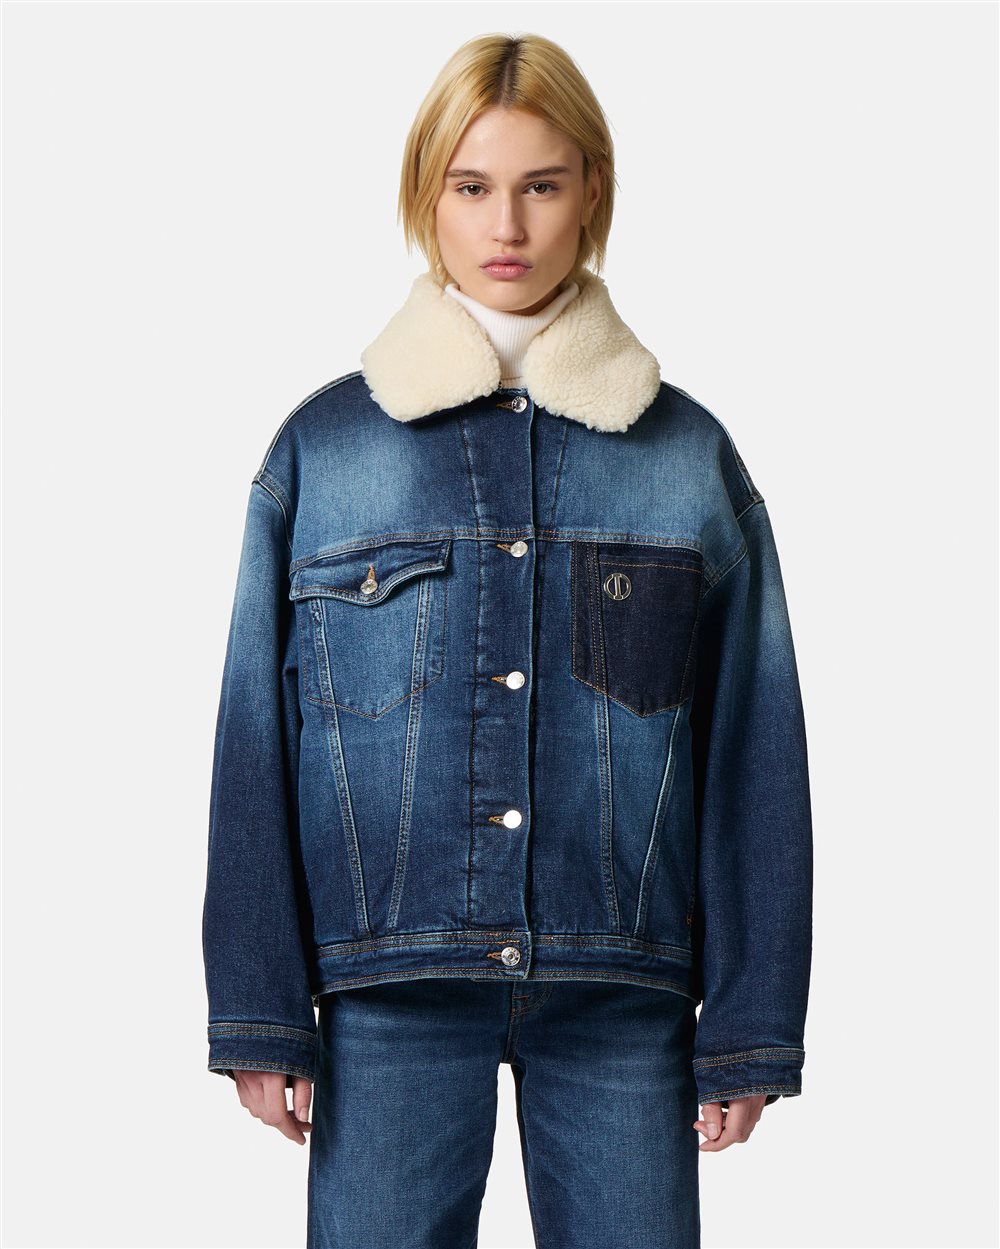 Denim jacket with eco-fur collar - Iceberg - Official Website